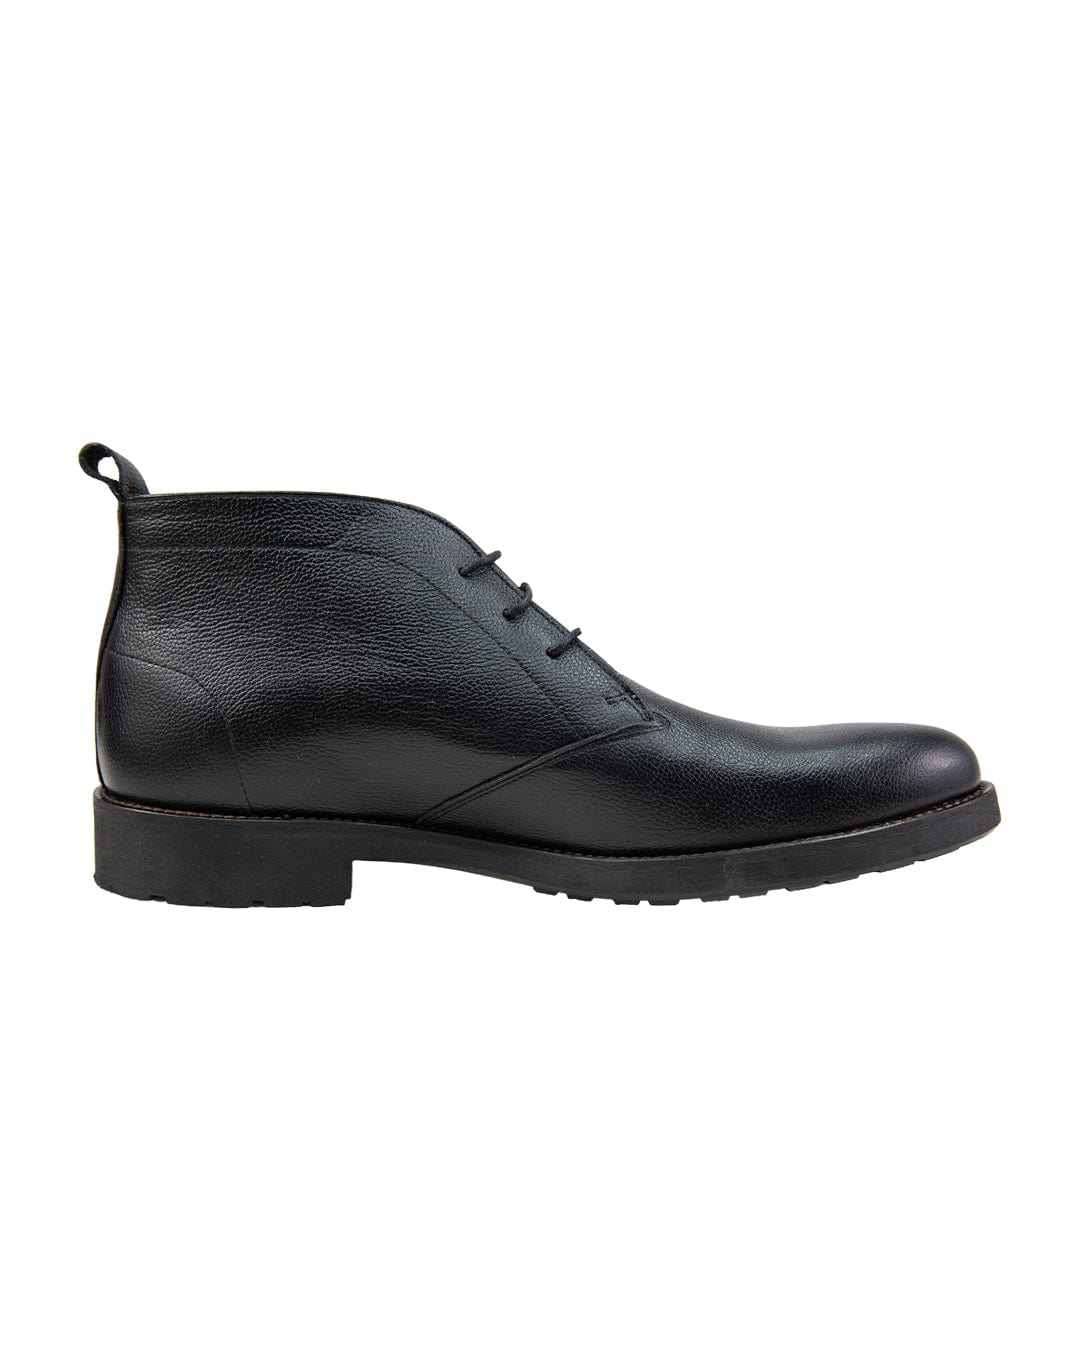 Gagliardi Shoes Gagliardi Black Scotch Grain Leather Chukka Boots